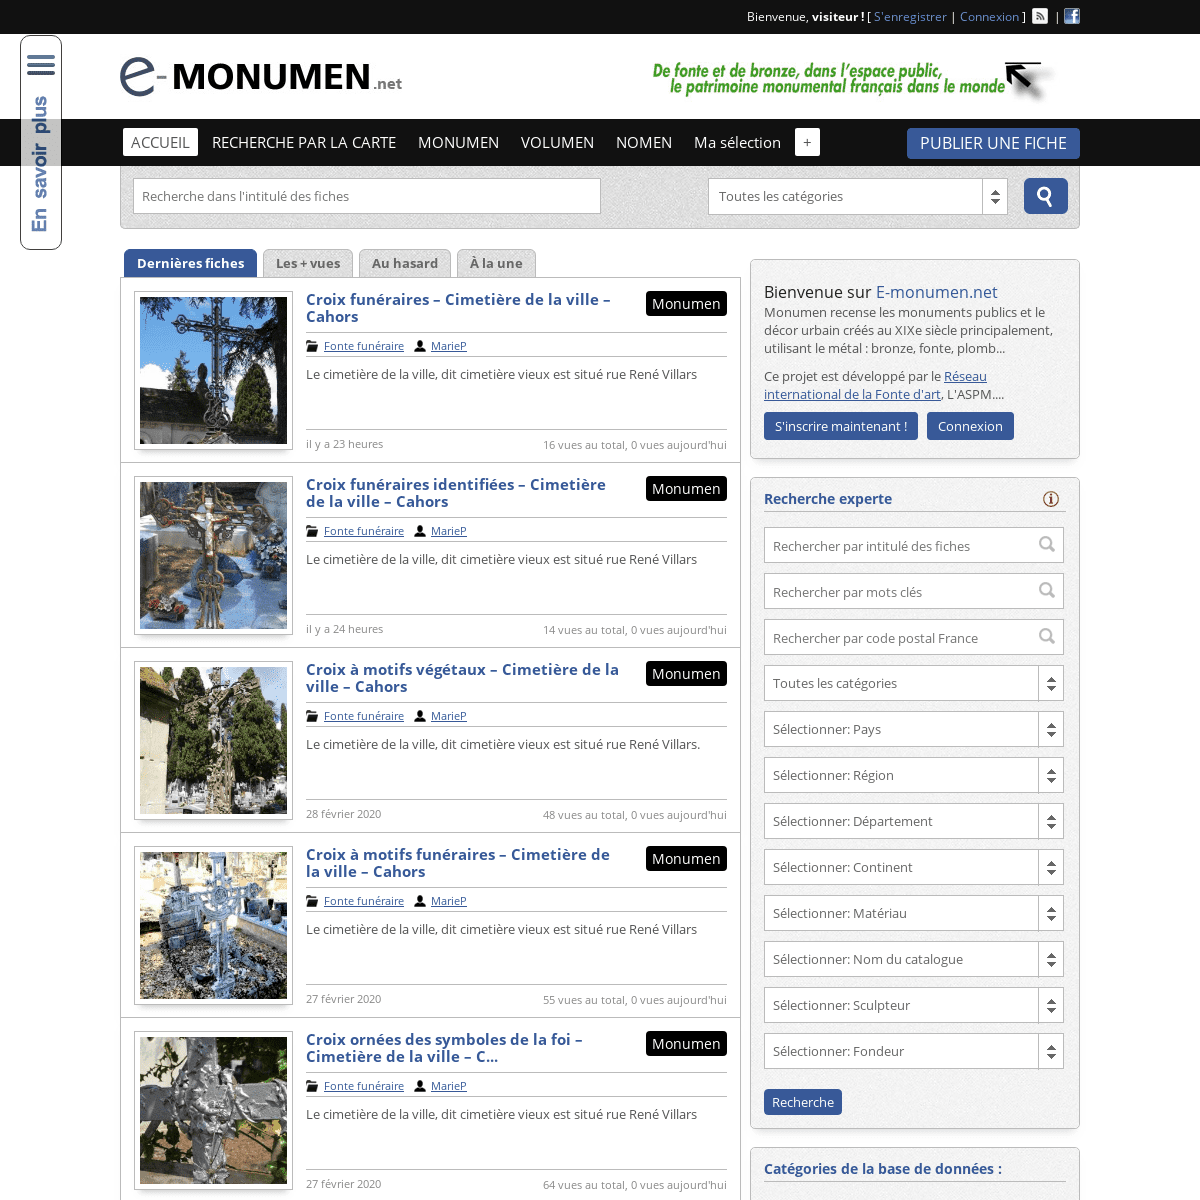 A complete backup of e-monumen.net